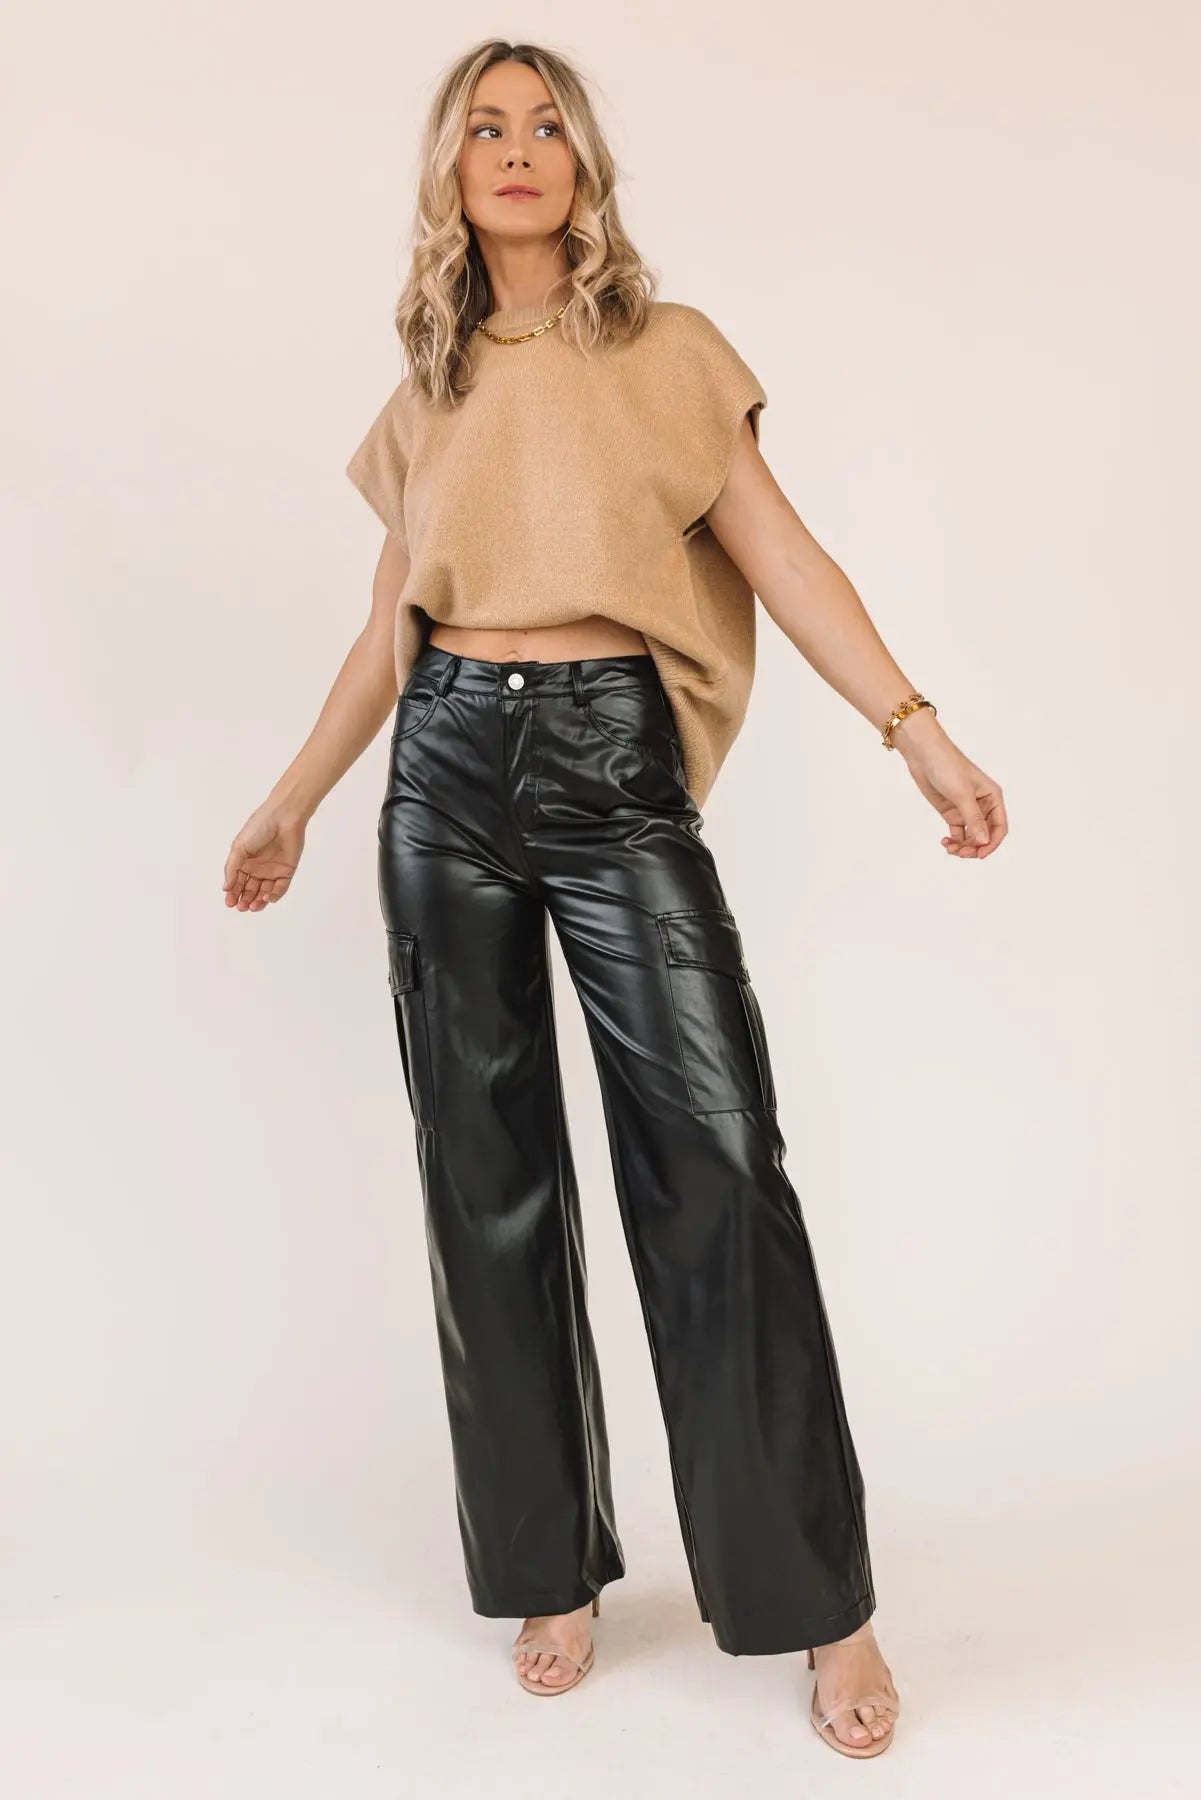 Stylish Modern Cotton Women's Cargo Pant, Hot & Trendy Pants, Fawn Color  Cargos, Elastic Waist, Comfortable